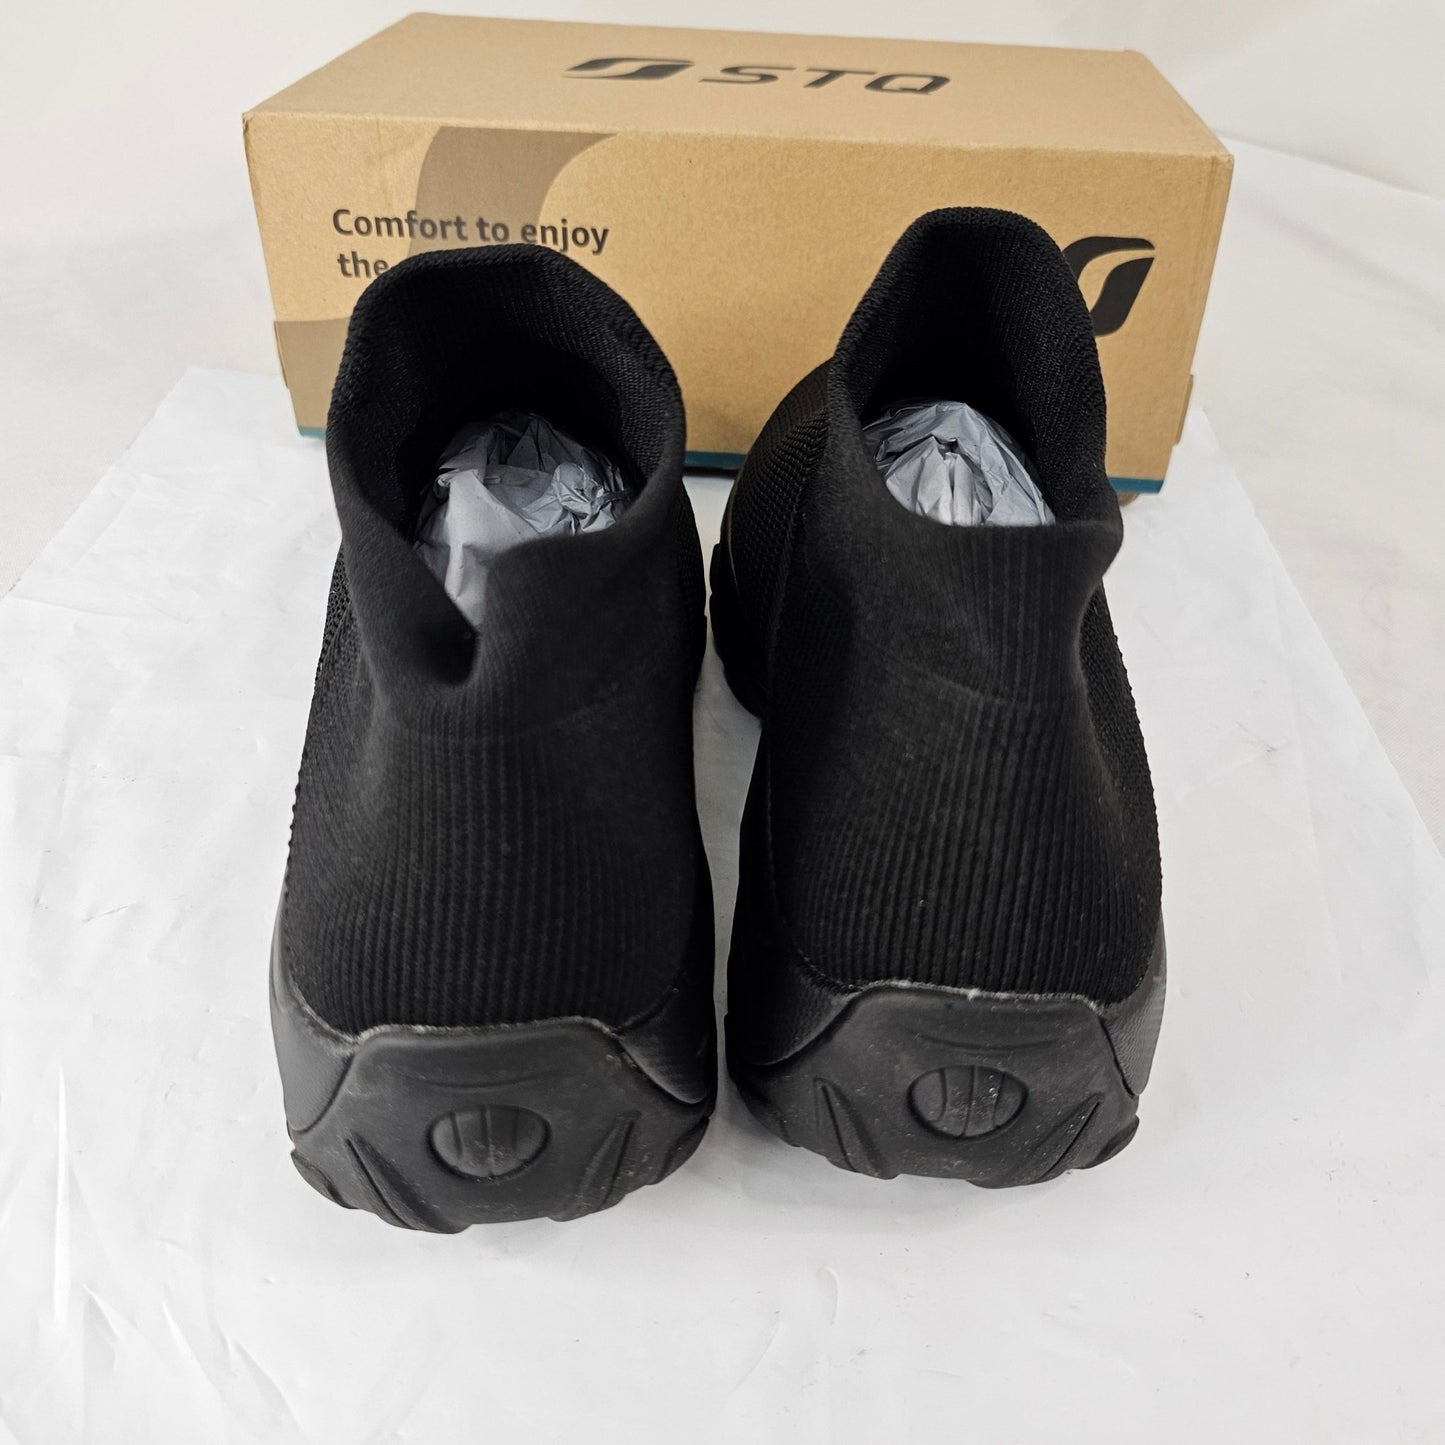 Mesh Walking Shoes for Women Size-7.5 US Stq - DQ Distribution